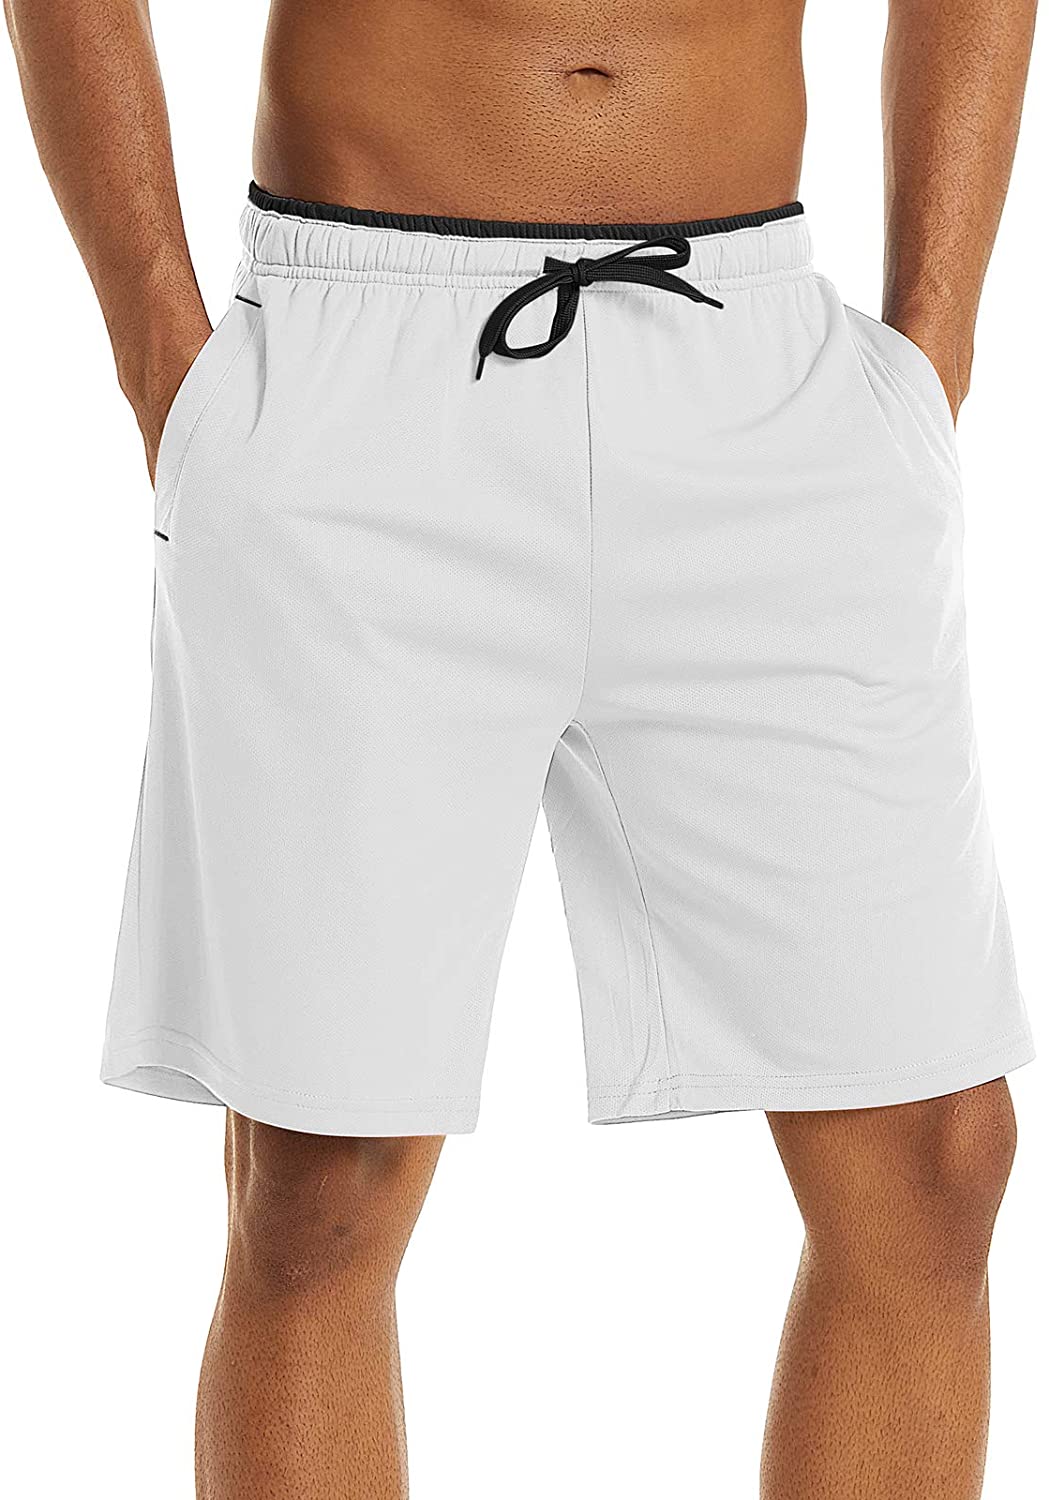 TACVASEN Lightweight Running Gym Training Shorts with Zip Pockets